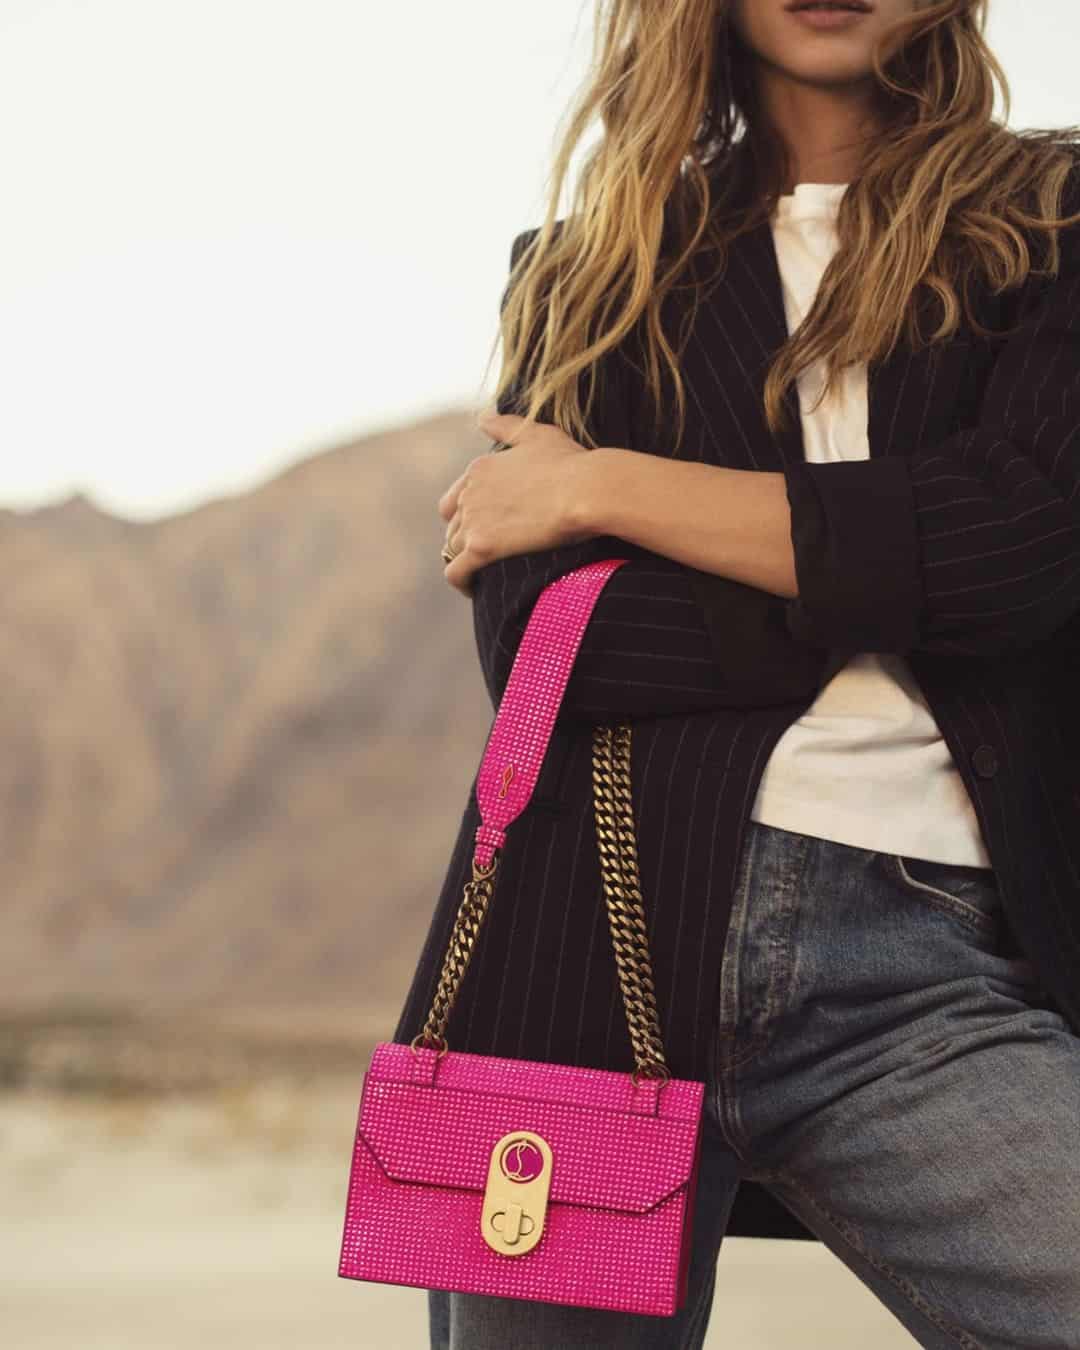 Bright pink Christian Louboutin bag